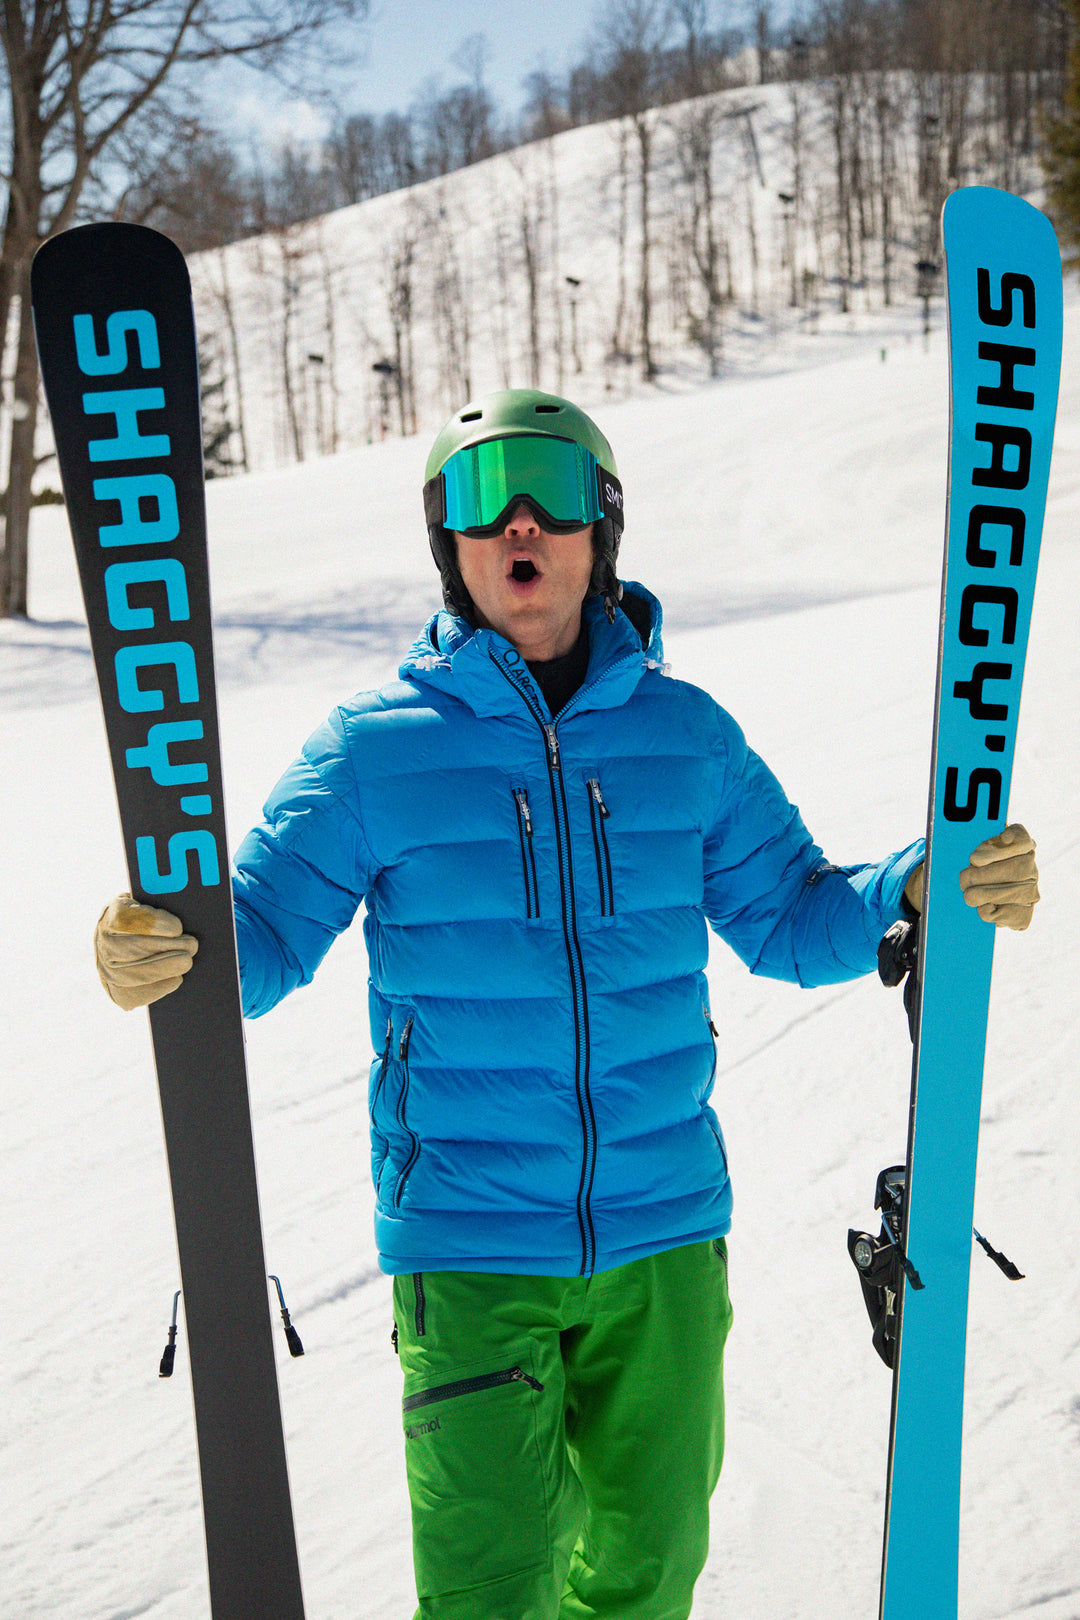 Shaggy's X SSMW COLLAB Skis